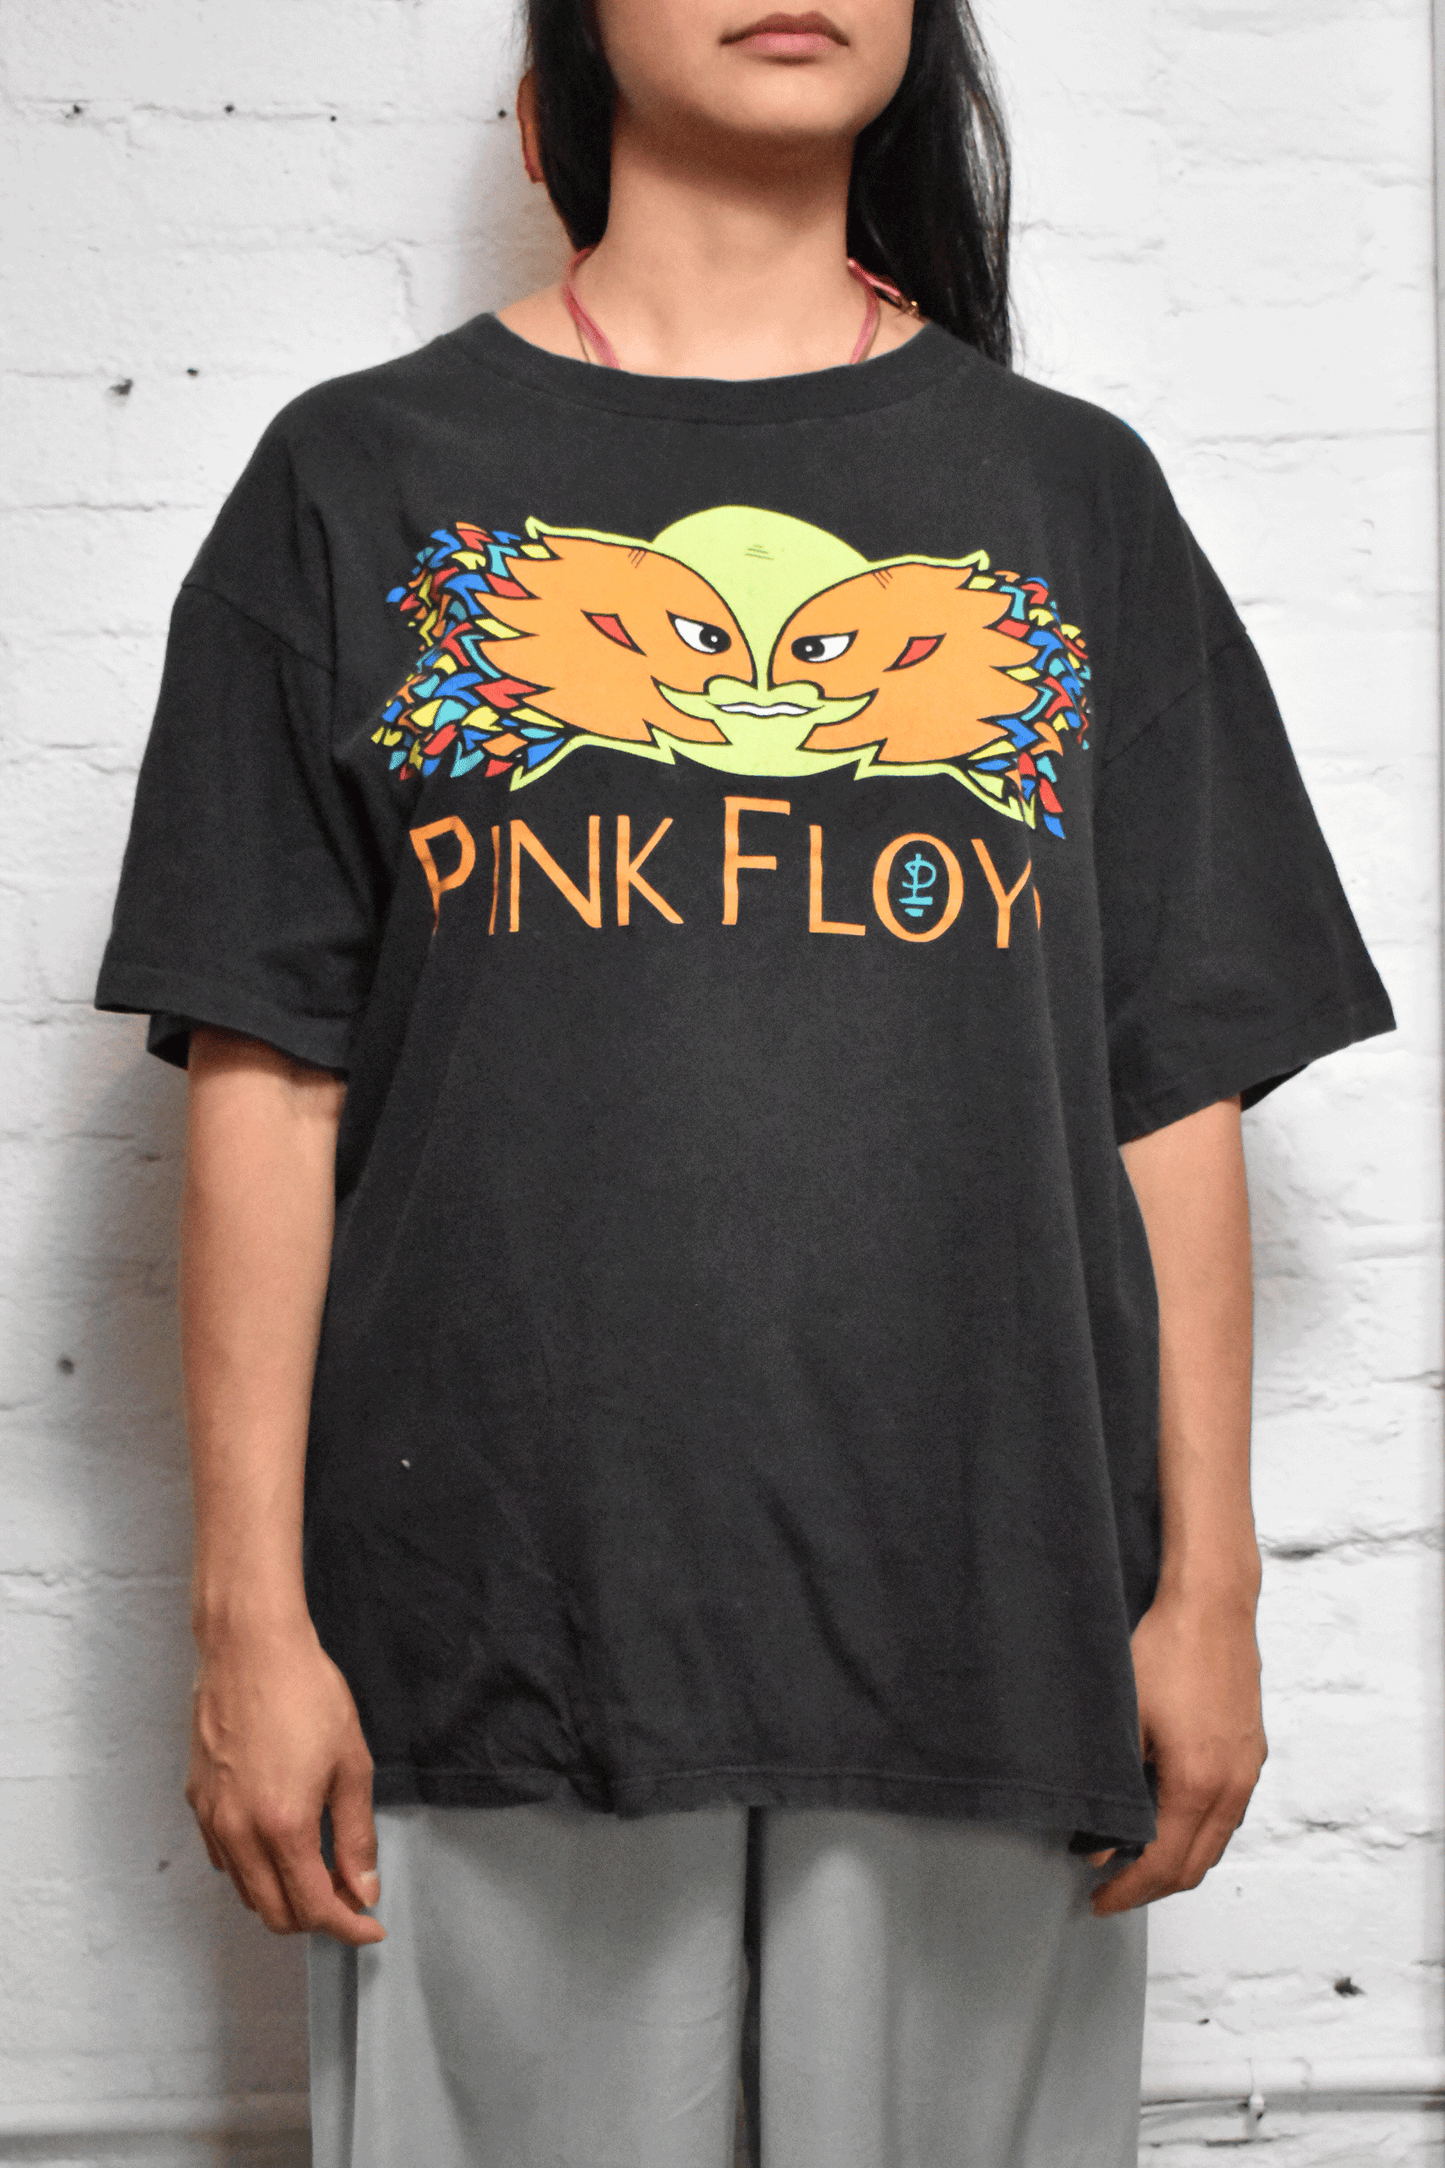 Vintage 1994 "Pink Floyd North America Tour" T-shirt